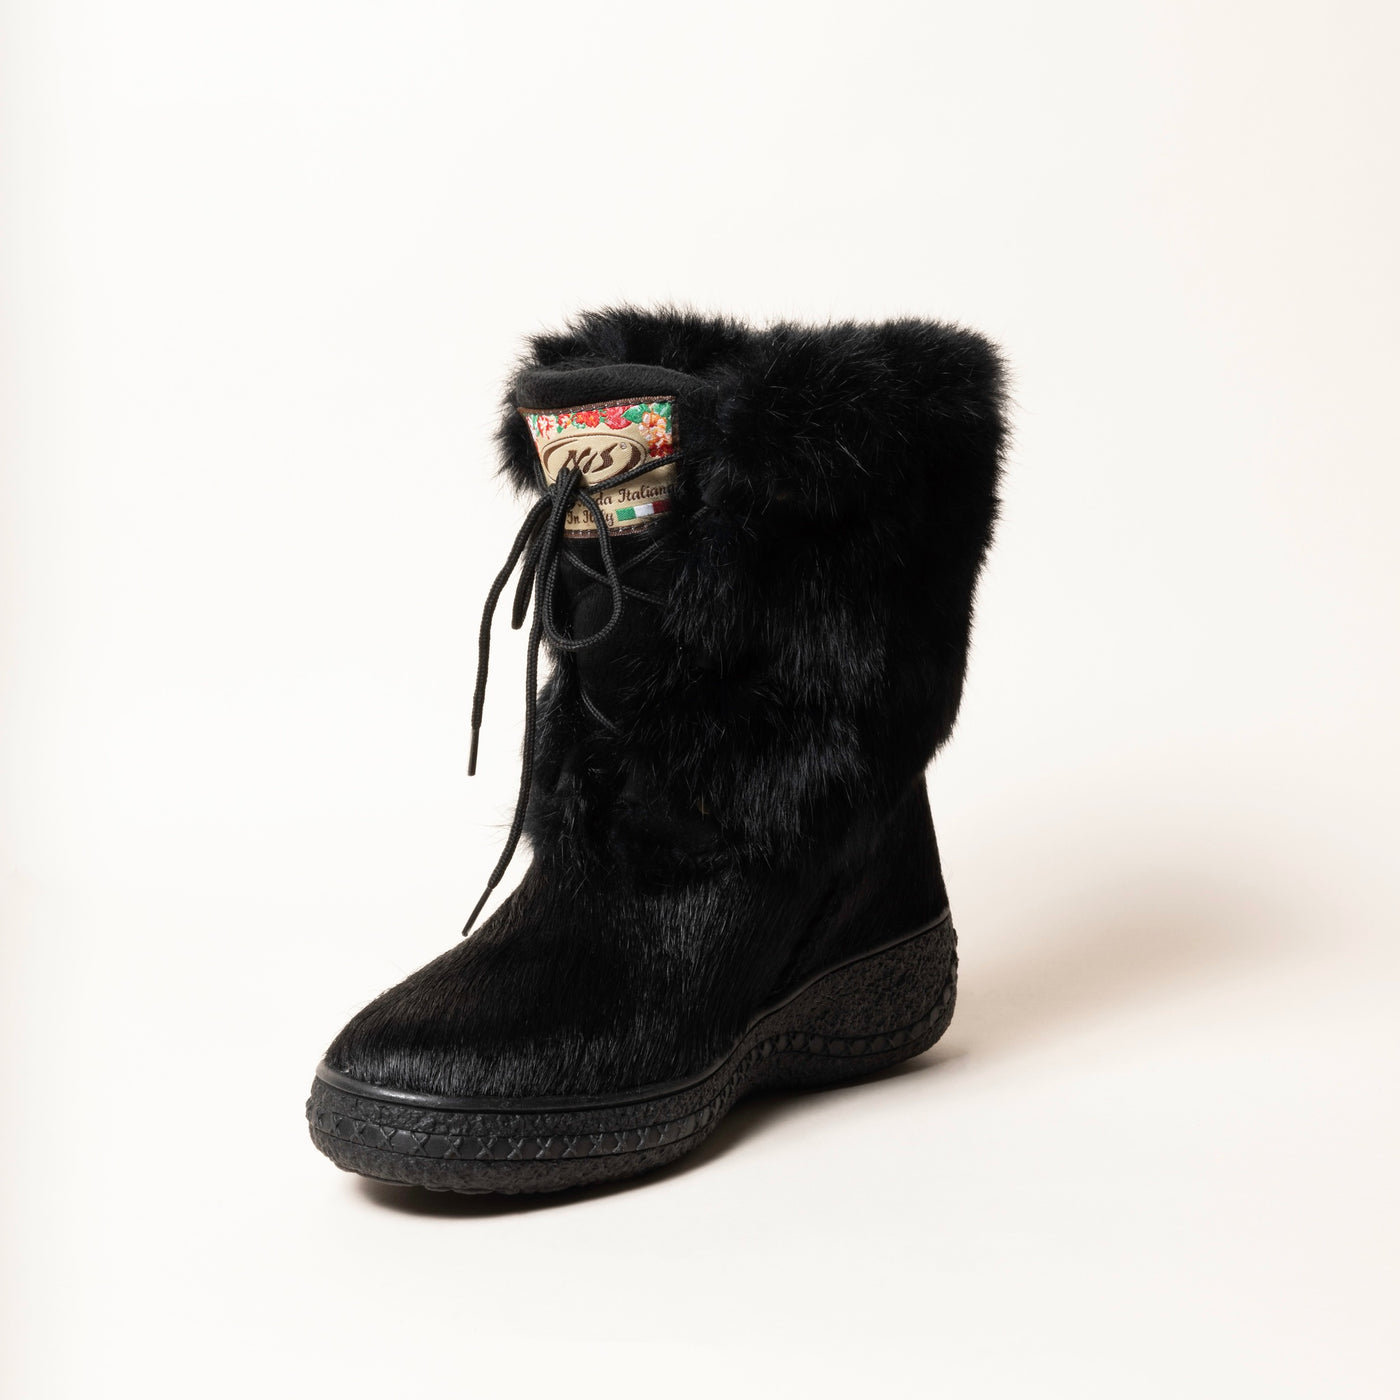 Women's snow boots in black